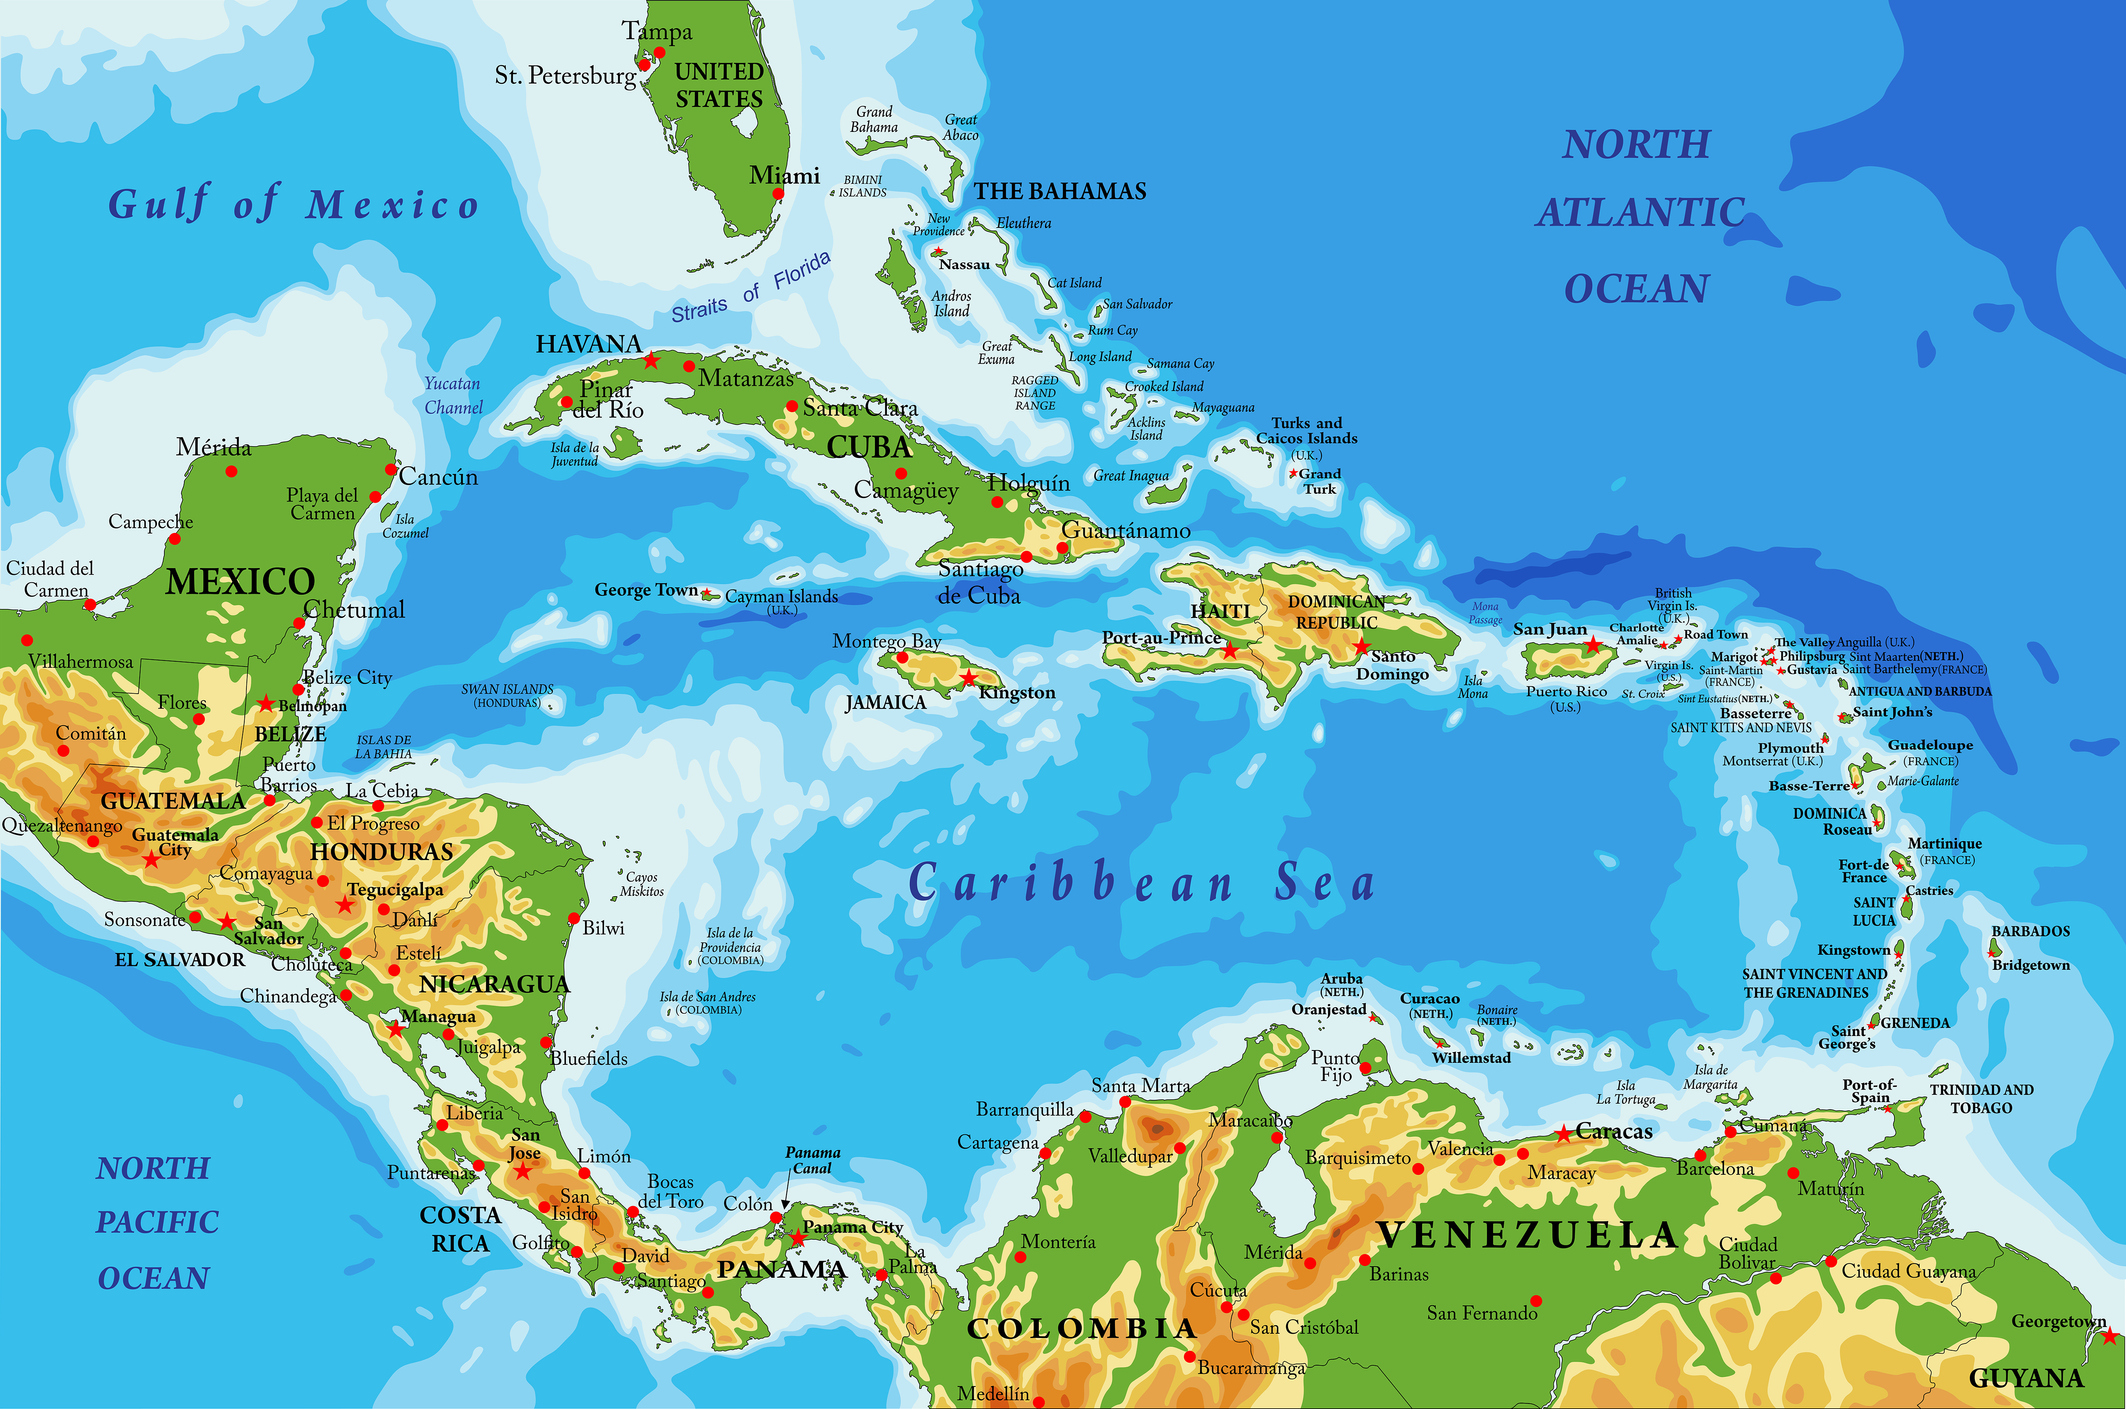 Carribean Sea